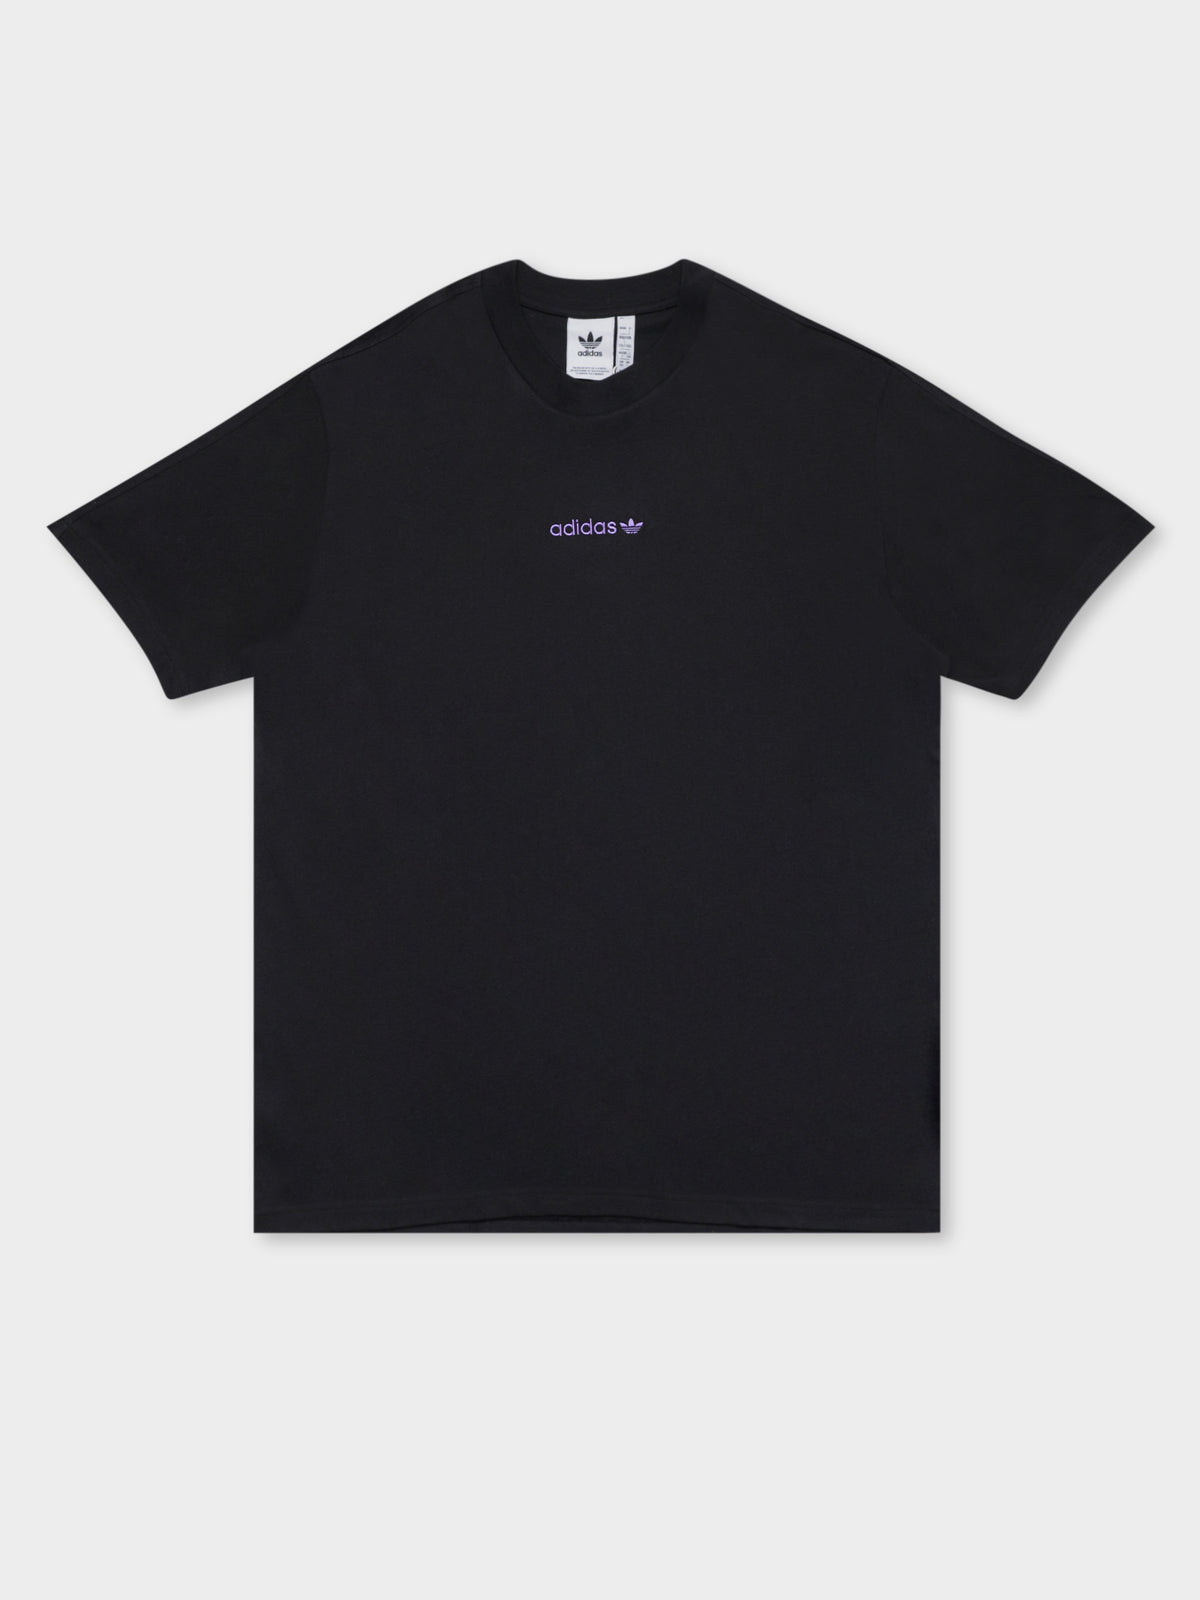 Edge Seam T-Shirt in Black